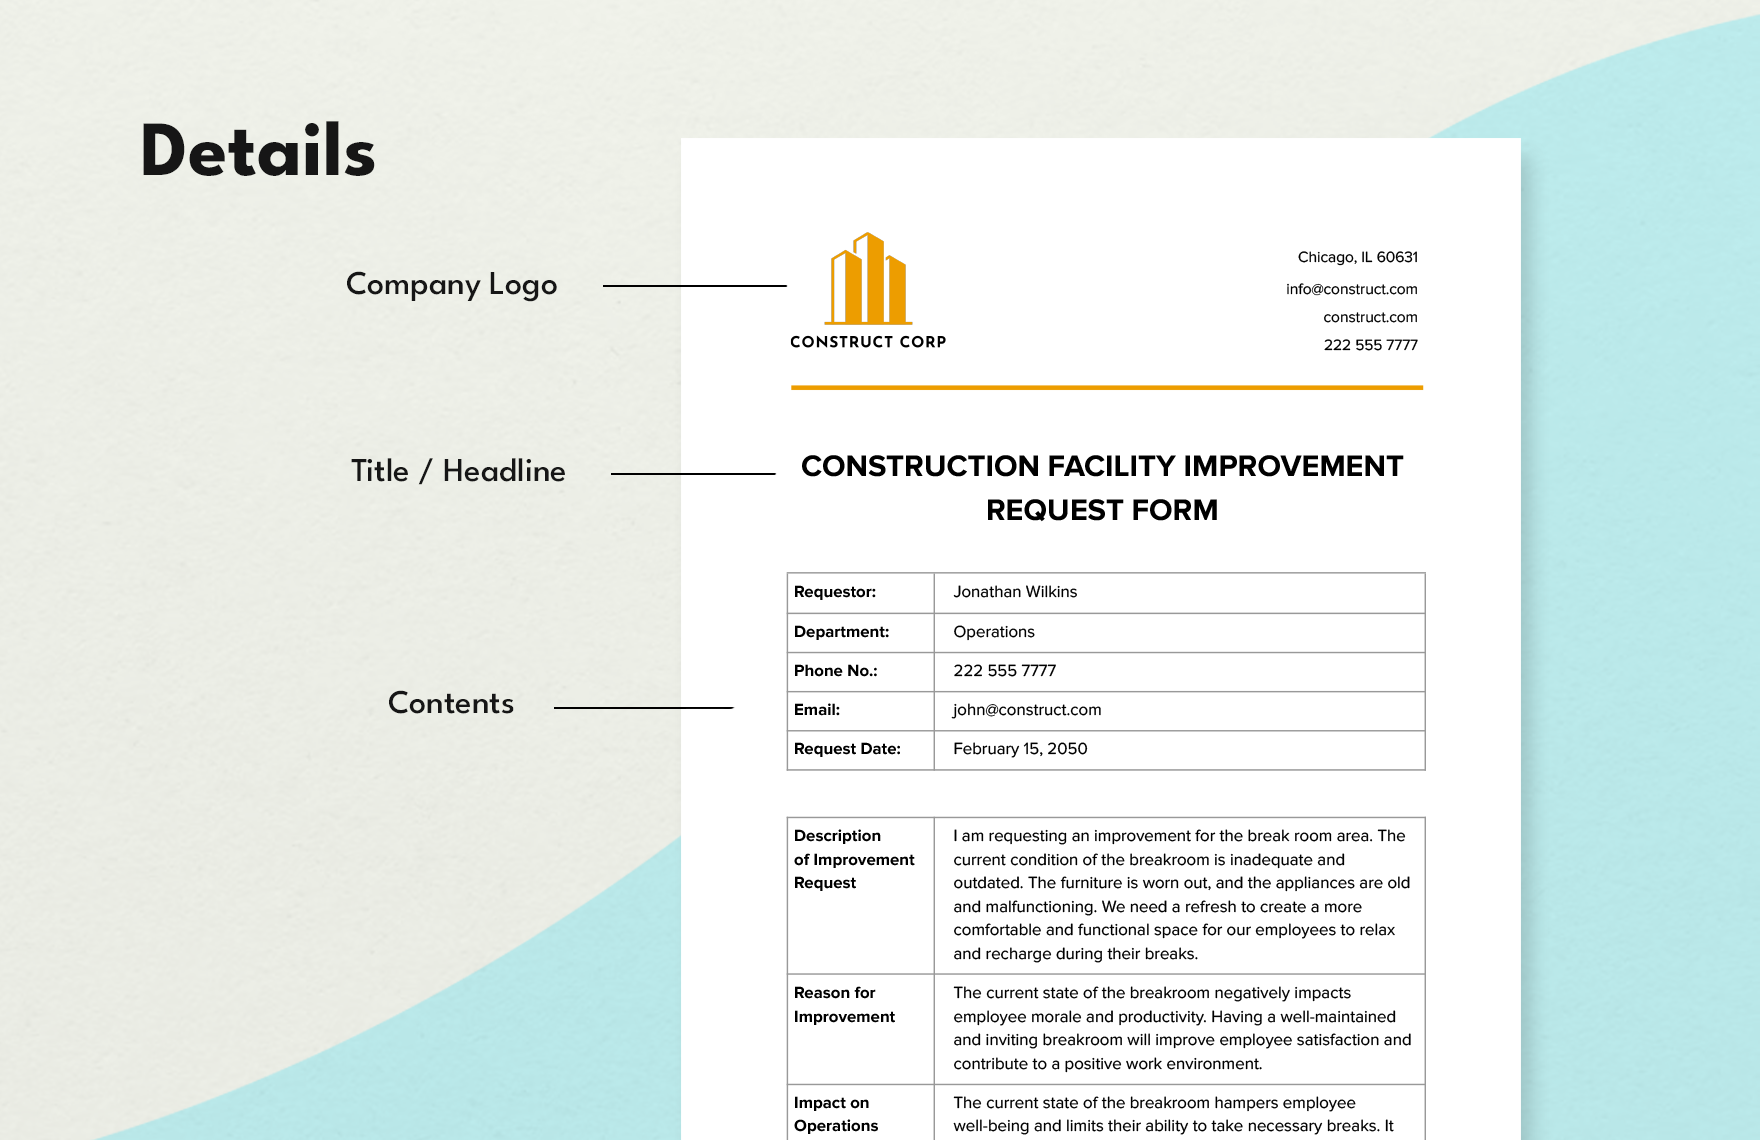 Construction Facility Improvement Request Form Template